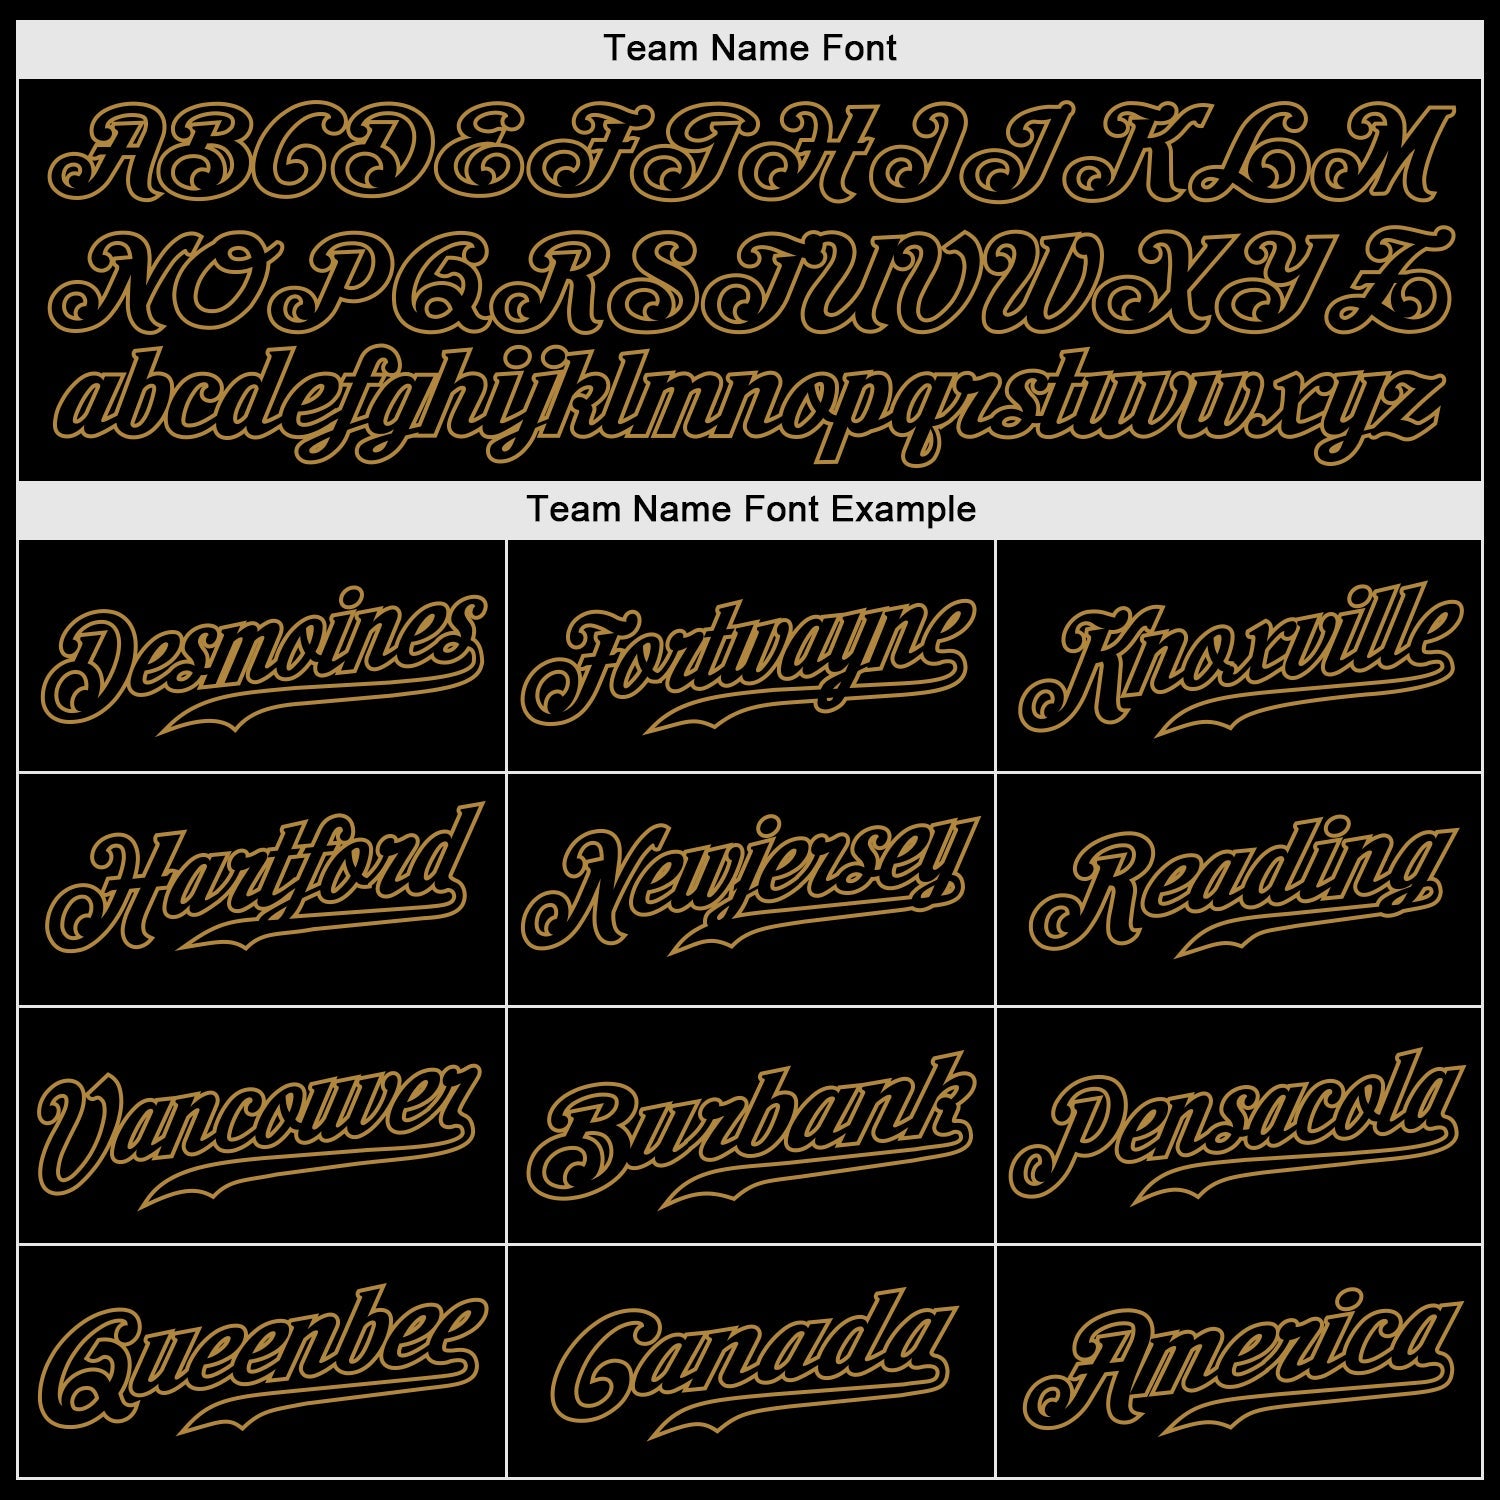 Custom Black Snakeskin Black-Old Gold Authentic Baseball Jersey